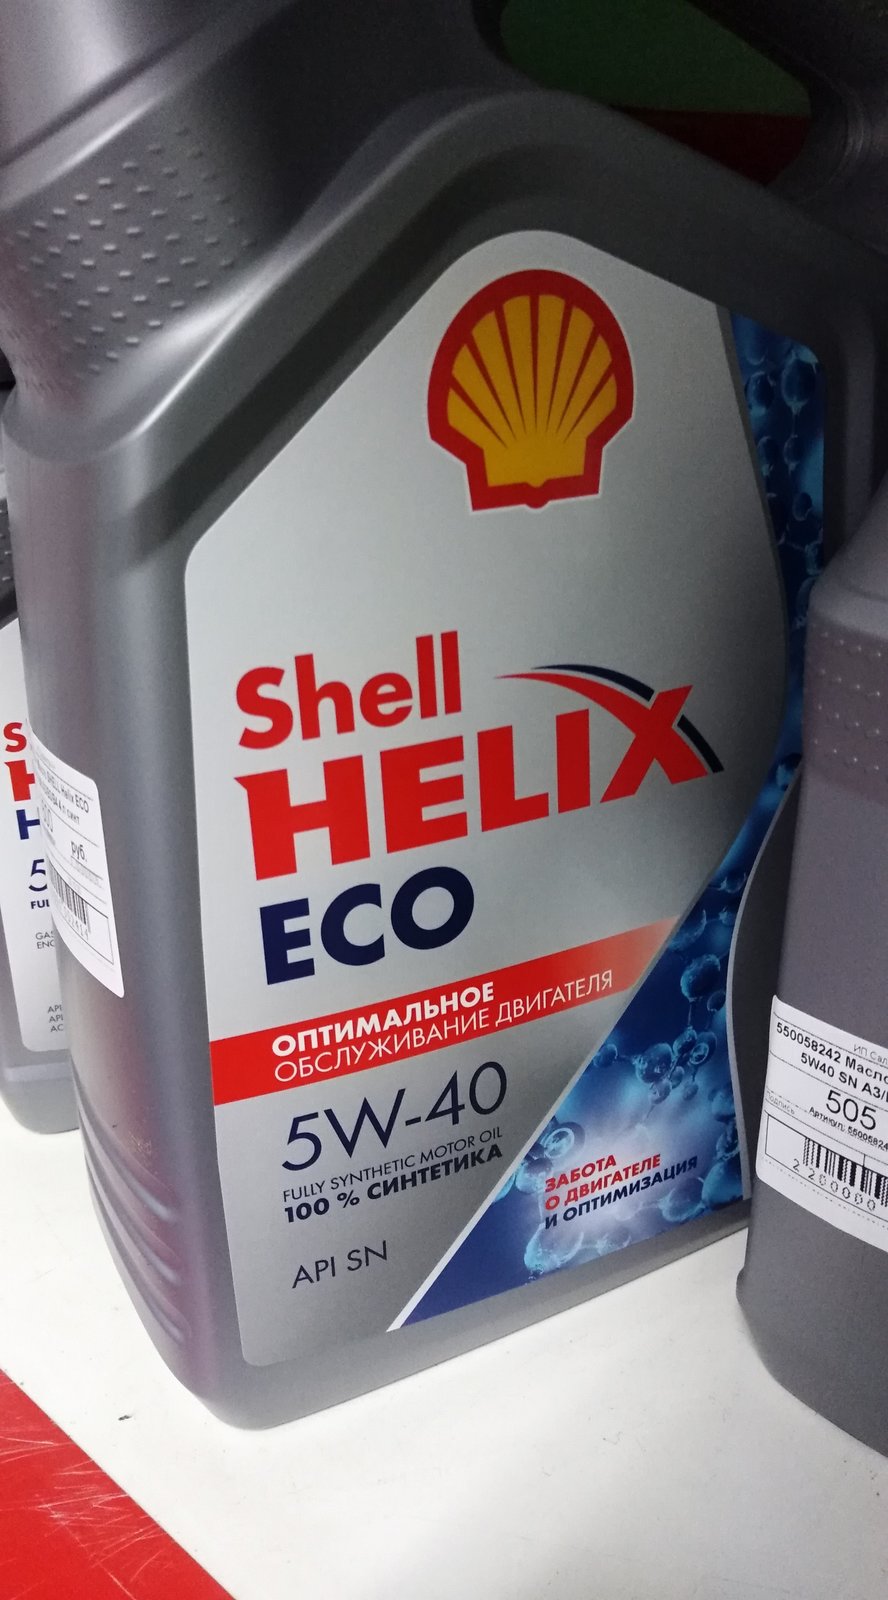 Масло helix отзывы. Шелл Хеликс 5w40. Shell Eco 5w40. Shell Eco 5-40. Shell Helix Eco 5w-40.